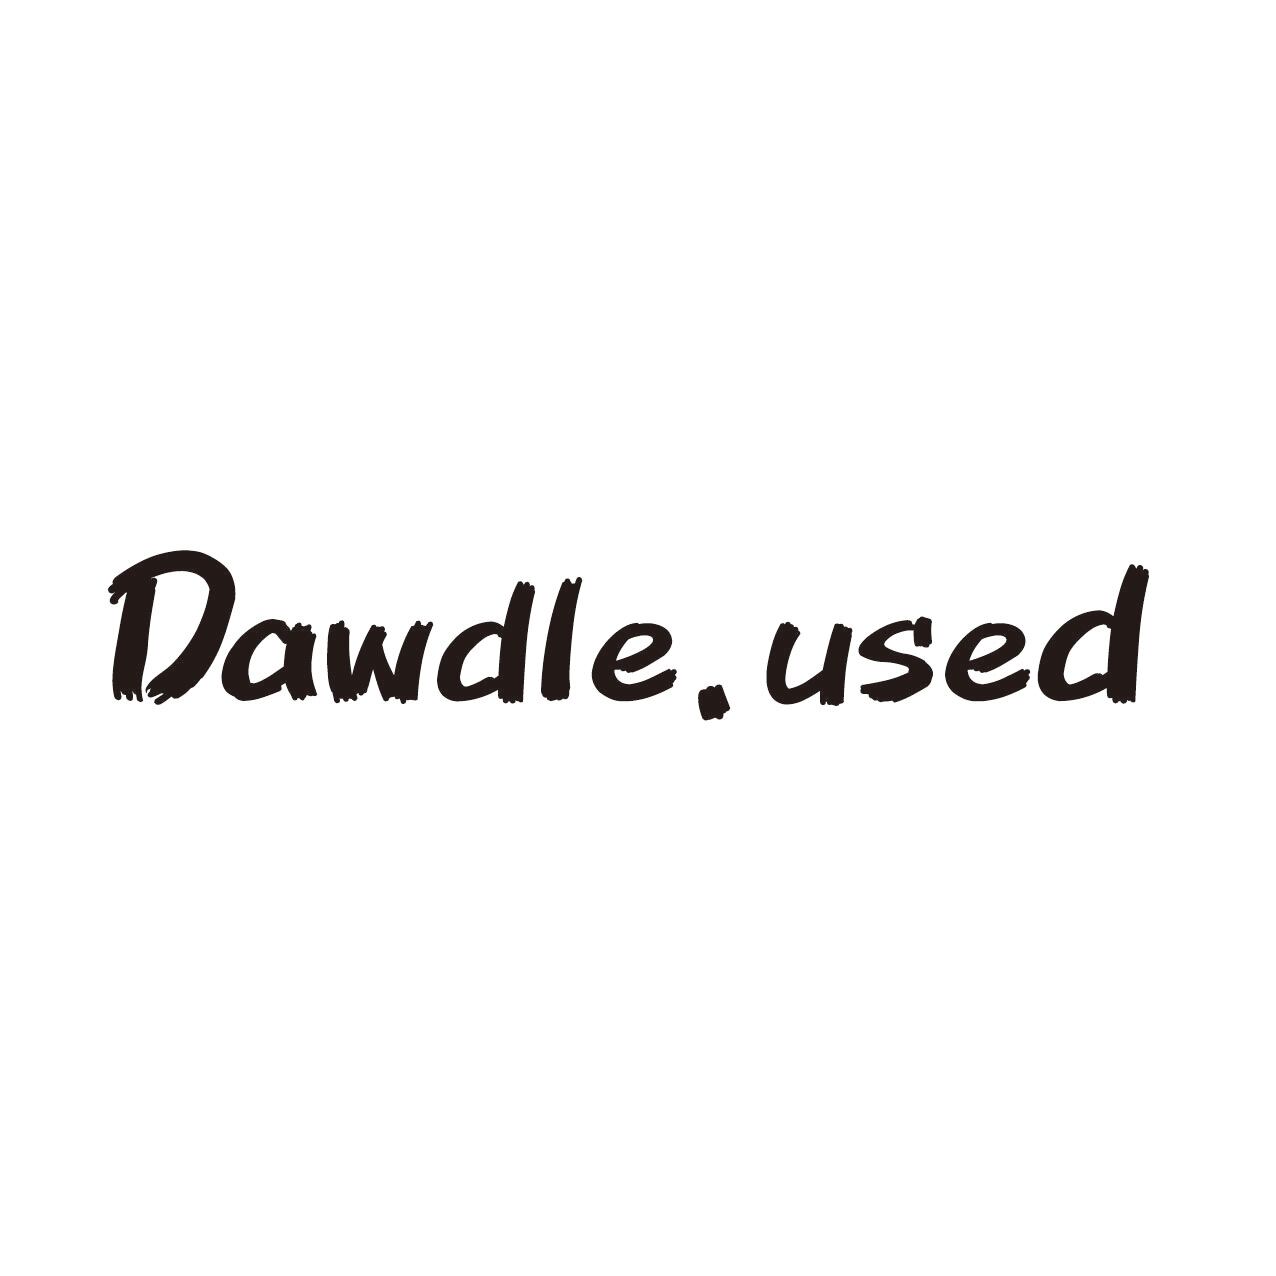 Dawdle.used